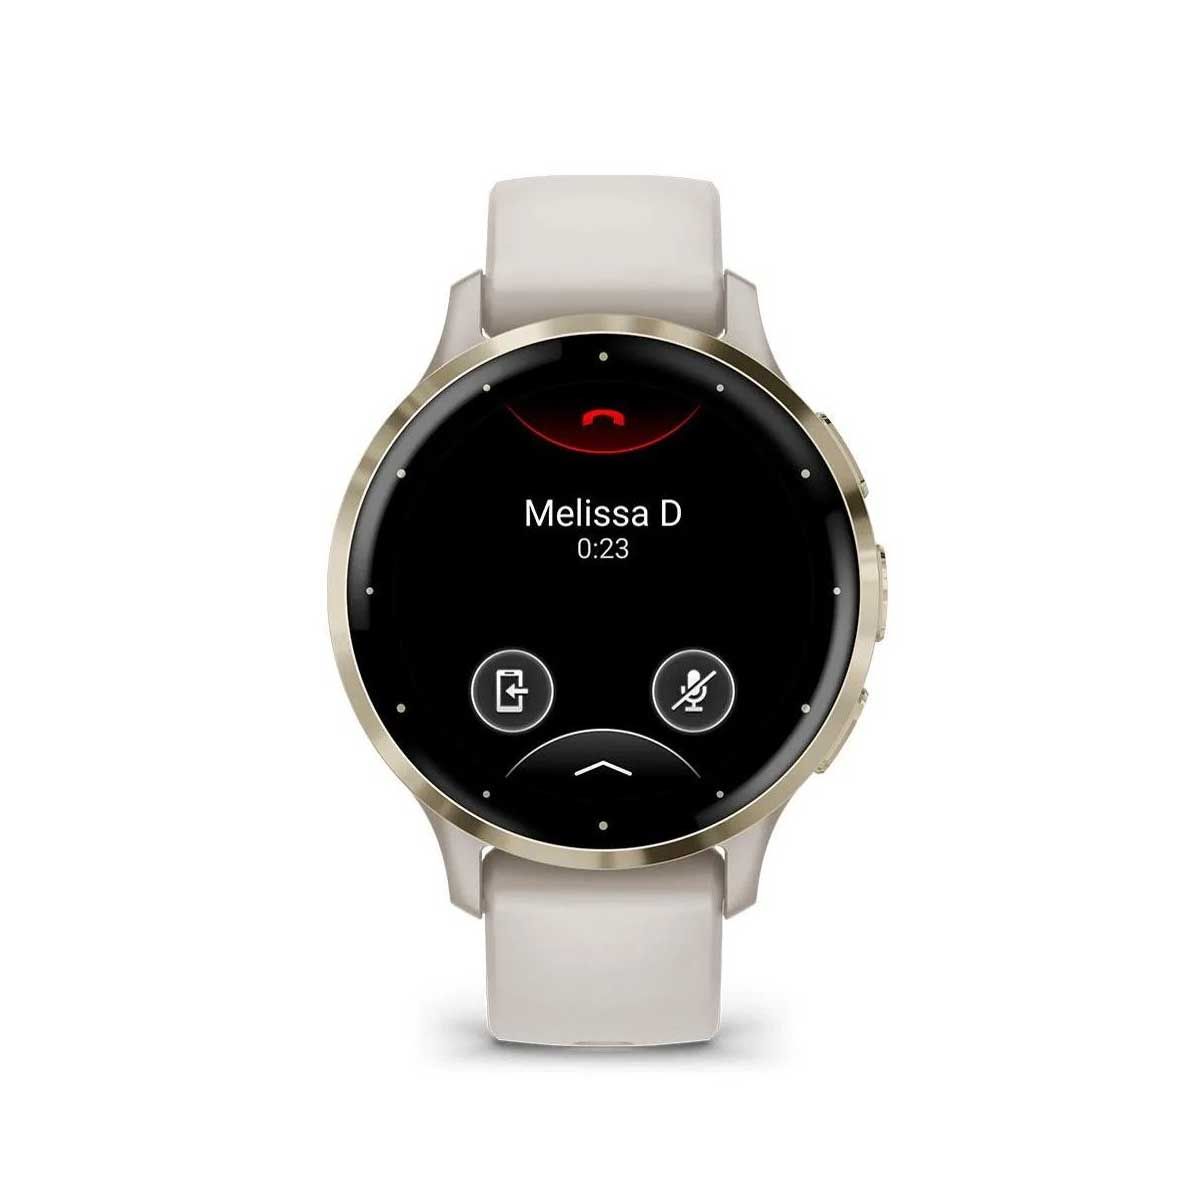 GARMIN Smart Watch  รุ่น Venu 3S 41 mm  Ivory